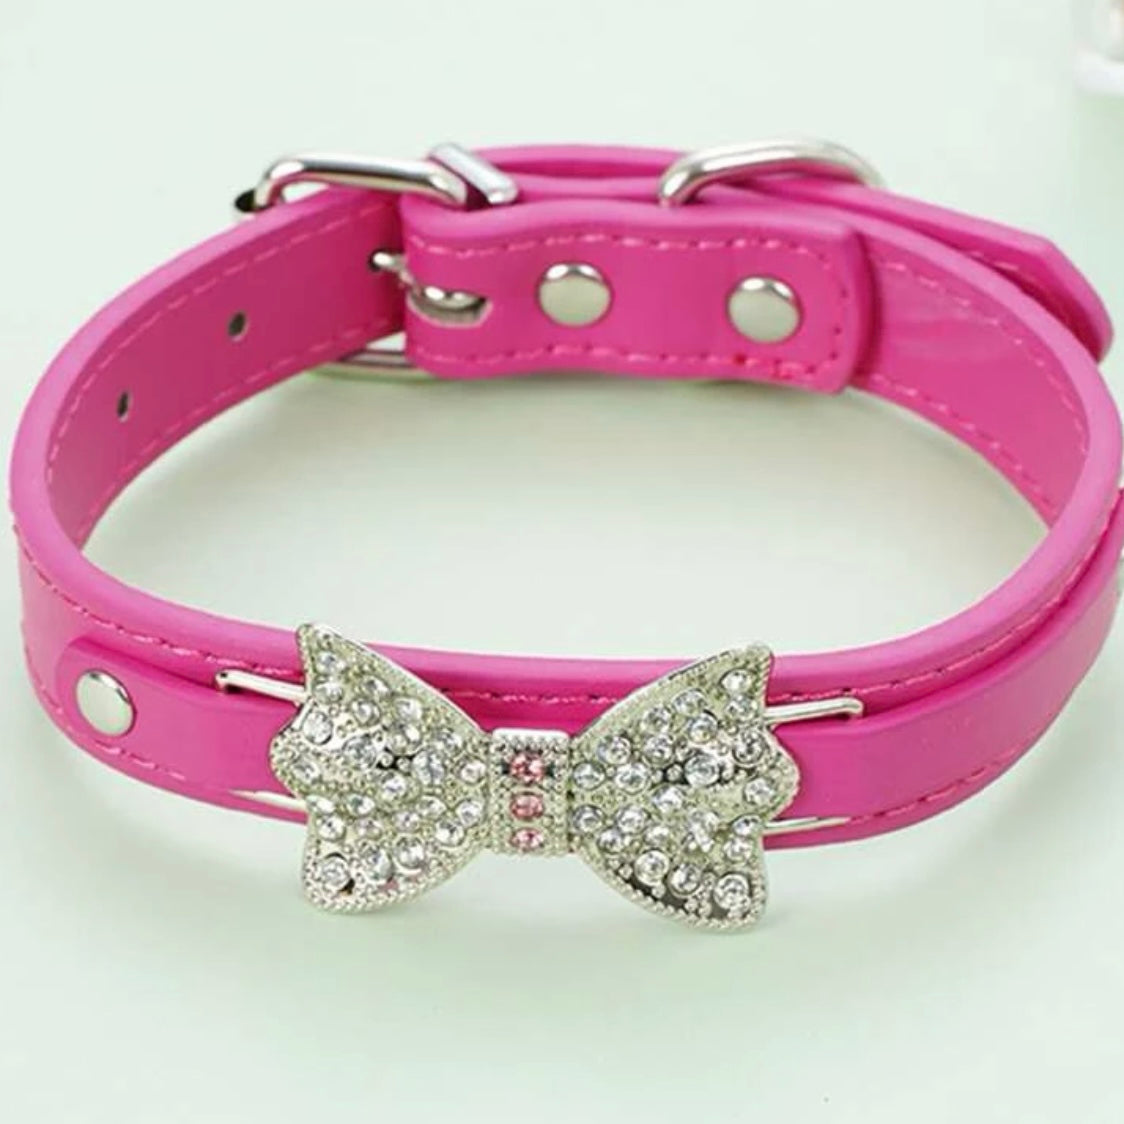 Rhinestone Pink Bow Dog Collar